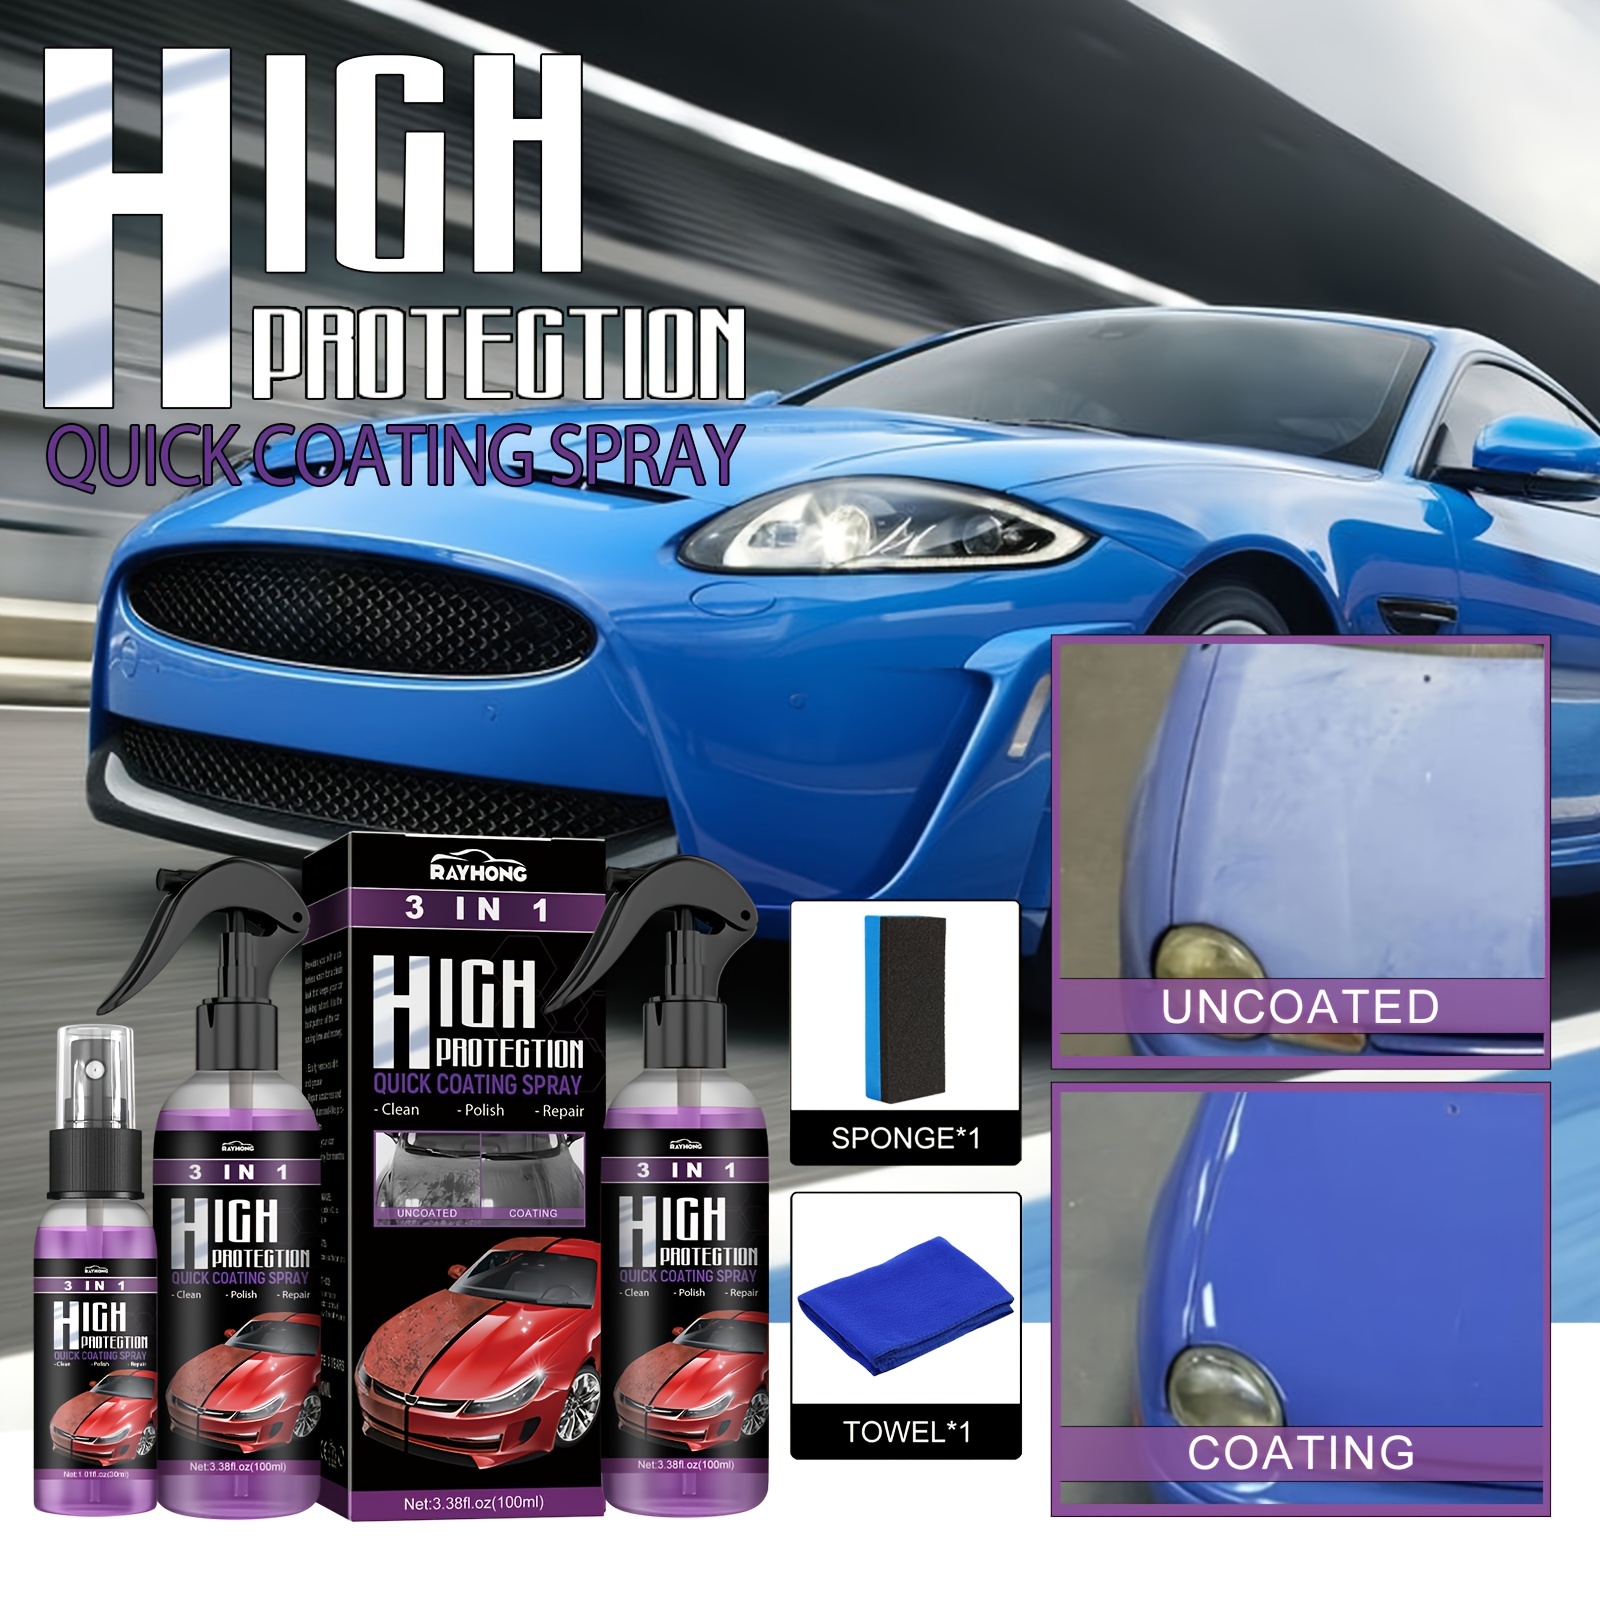 Sopami Car Spray, 500ml Sopami Car Coating Spray, Car Coating Agent Spray,  3 in 1 High Protection Quick Car Coating Spray, Quick Coat Car Wax Polish